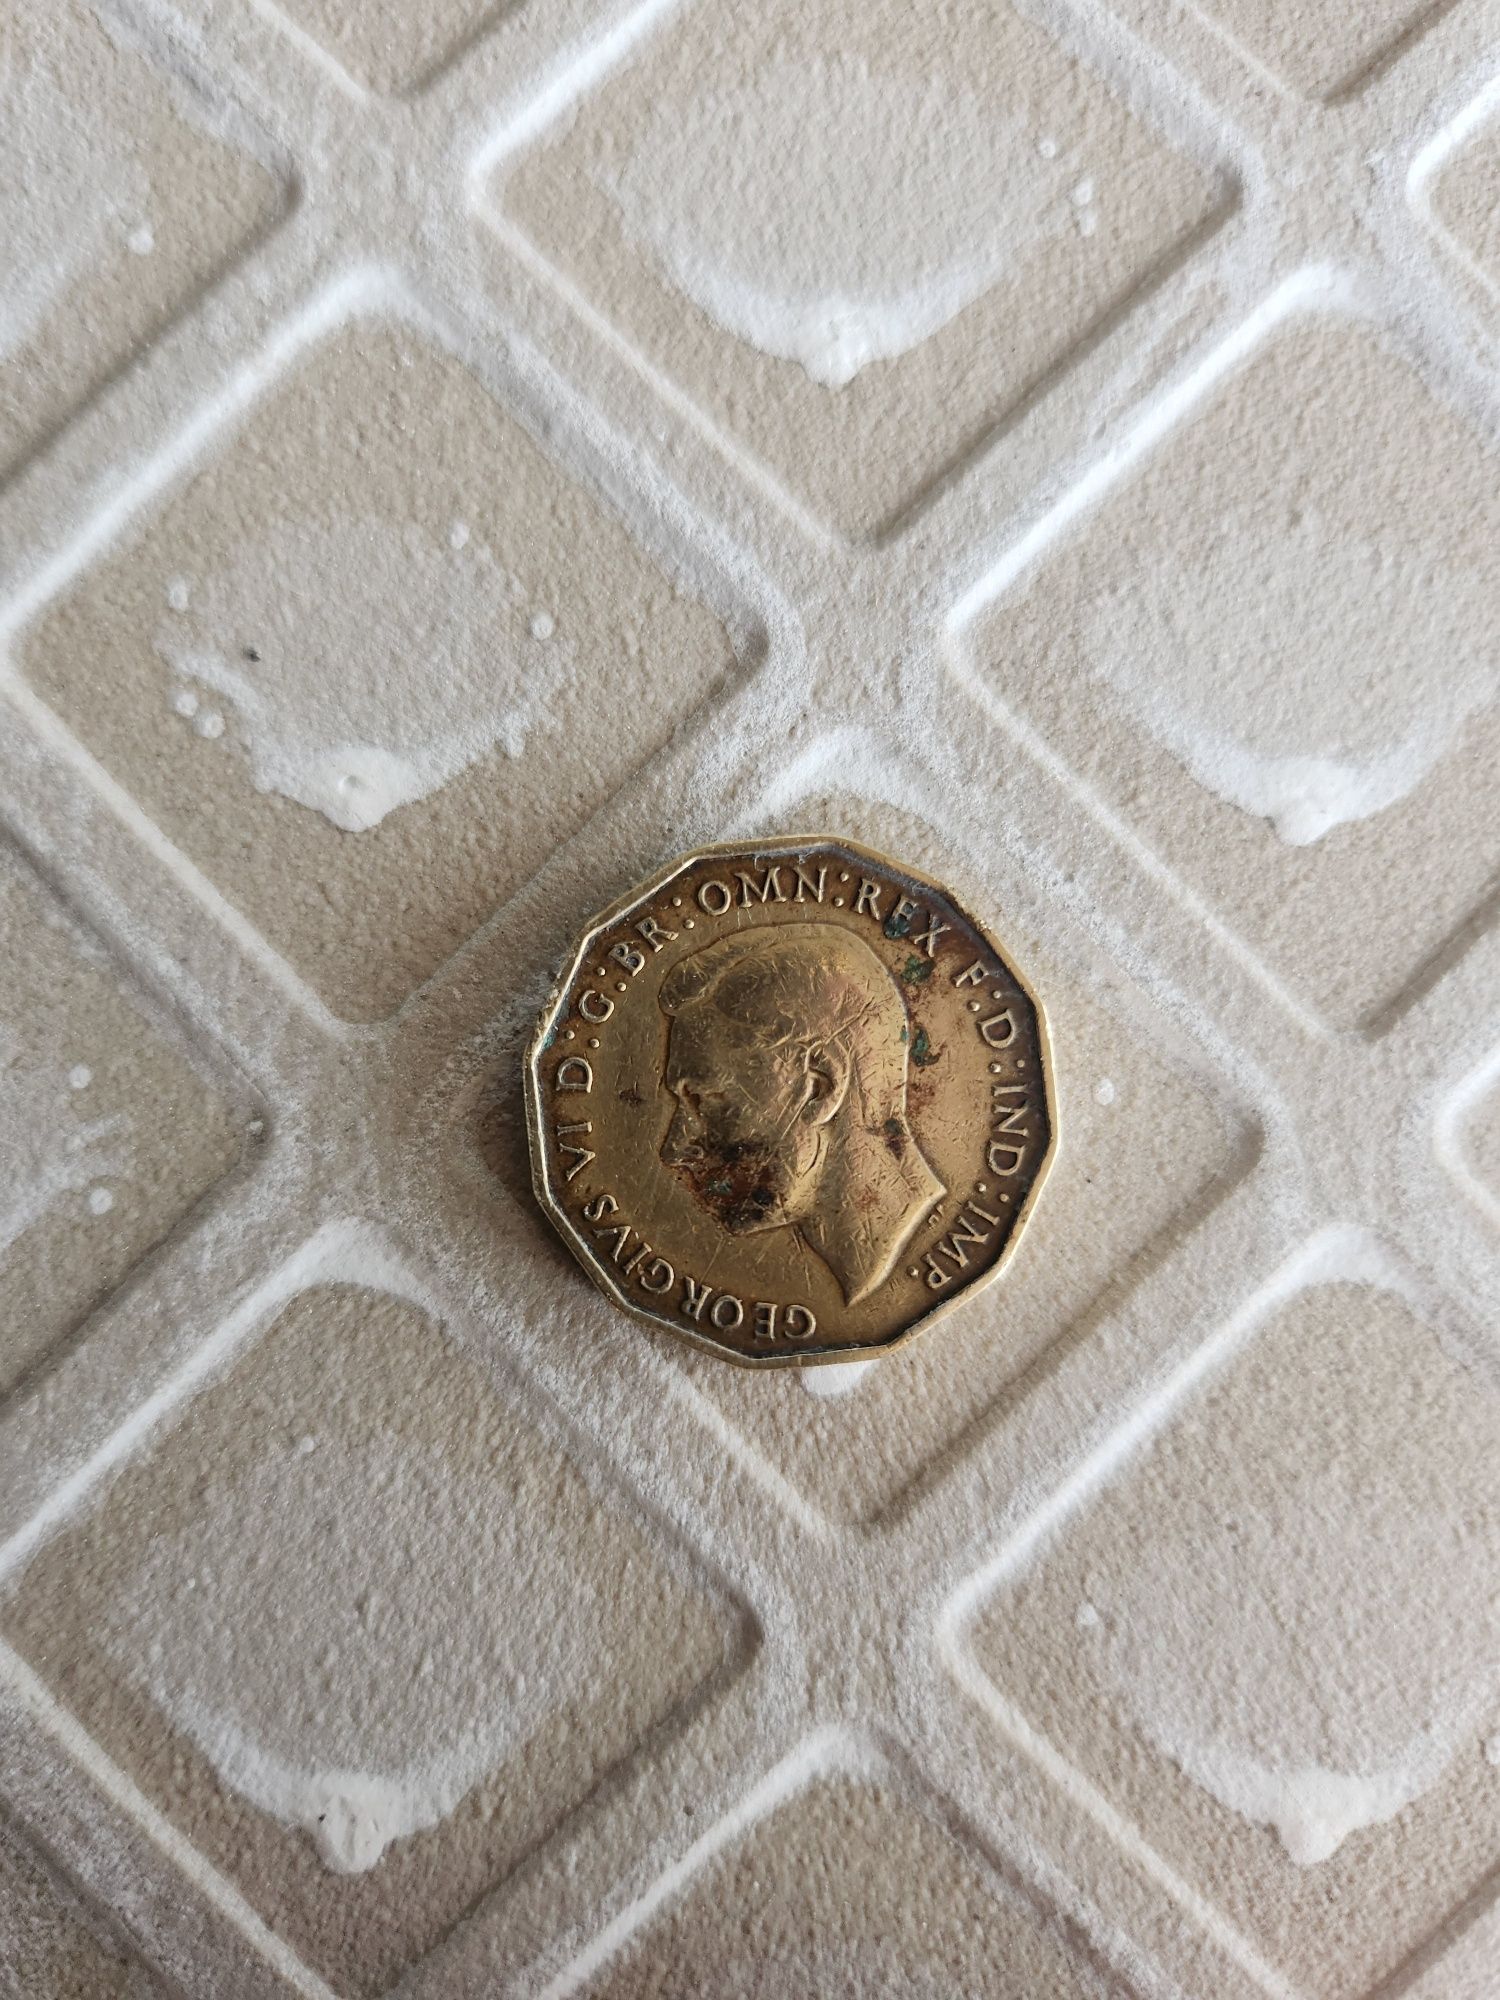 Moneda rara: Three Pence 1937